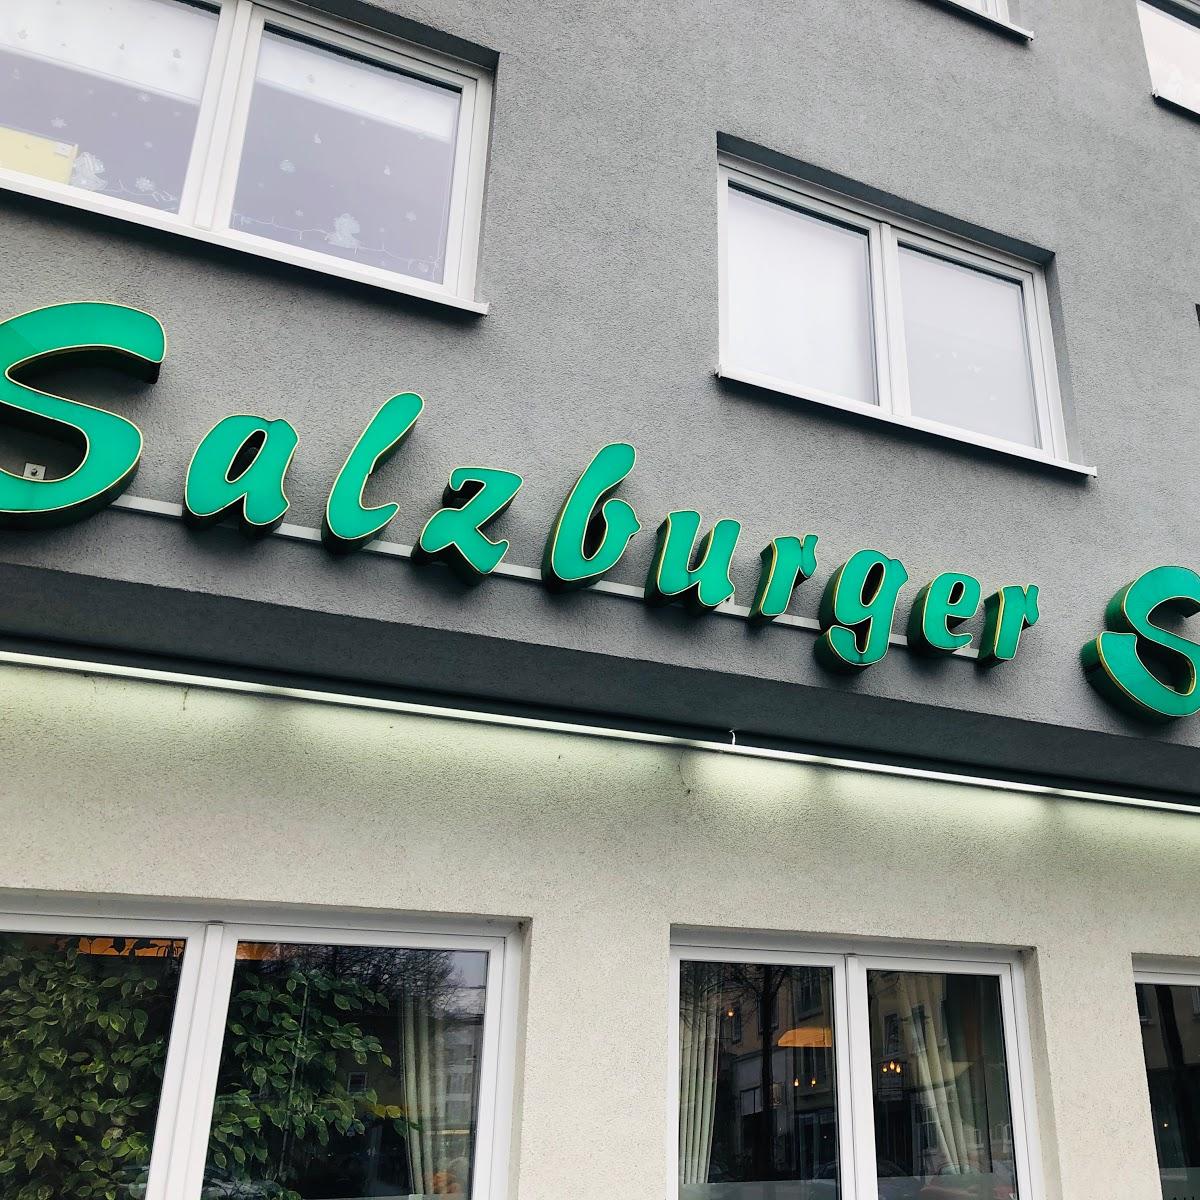 Restaurant "Salzburger Stuben" in  Kassel